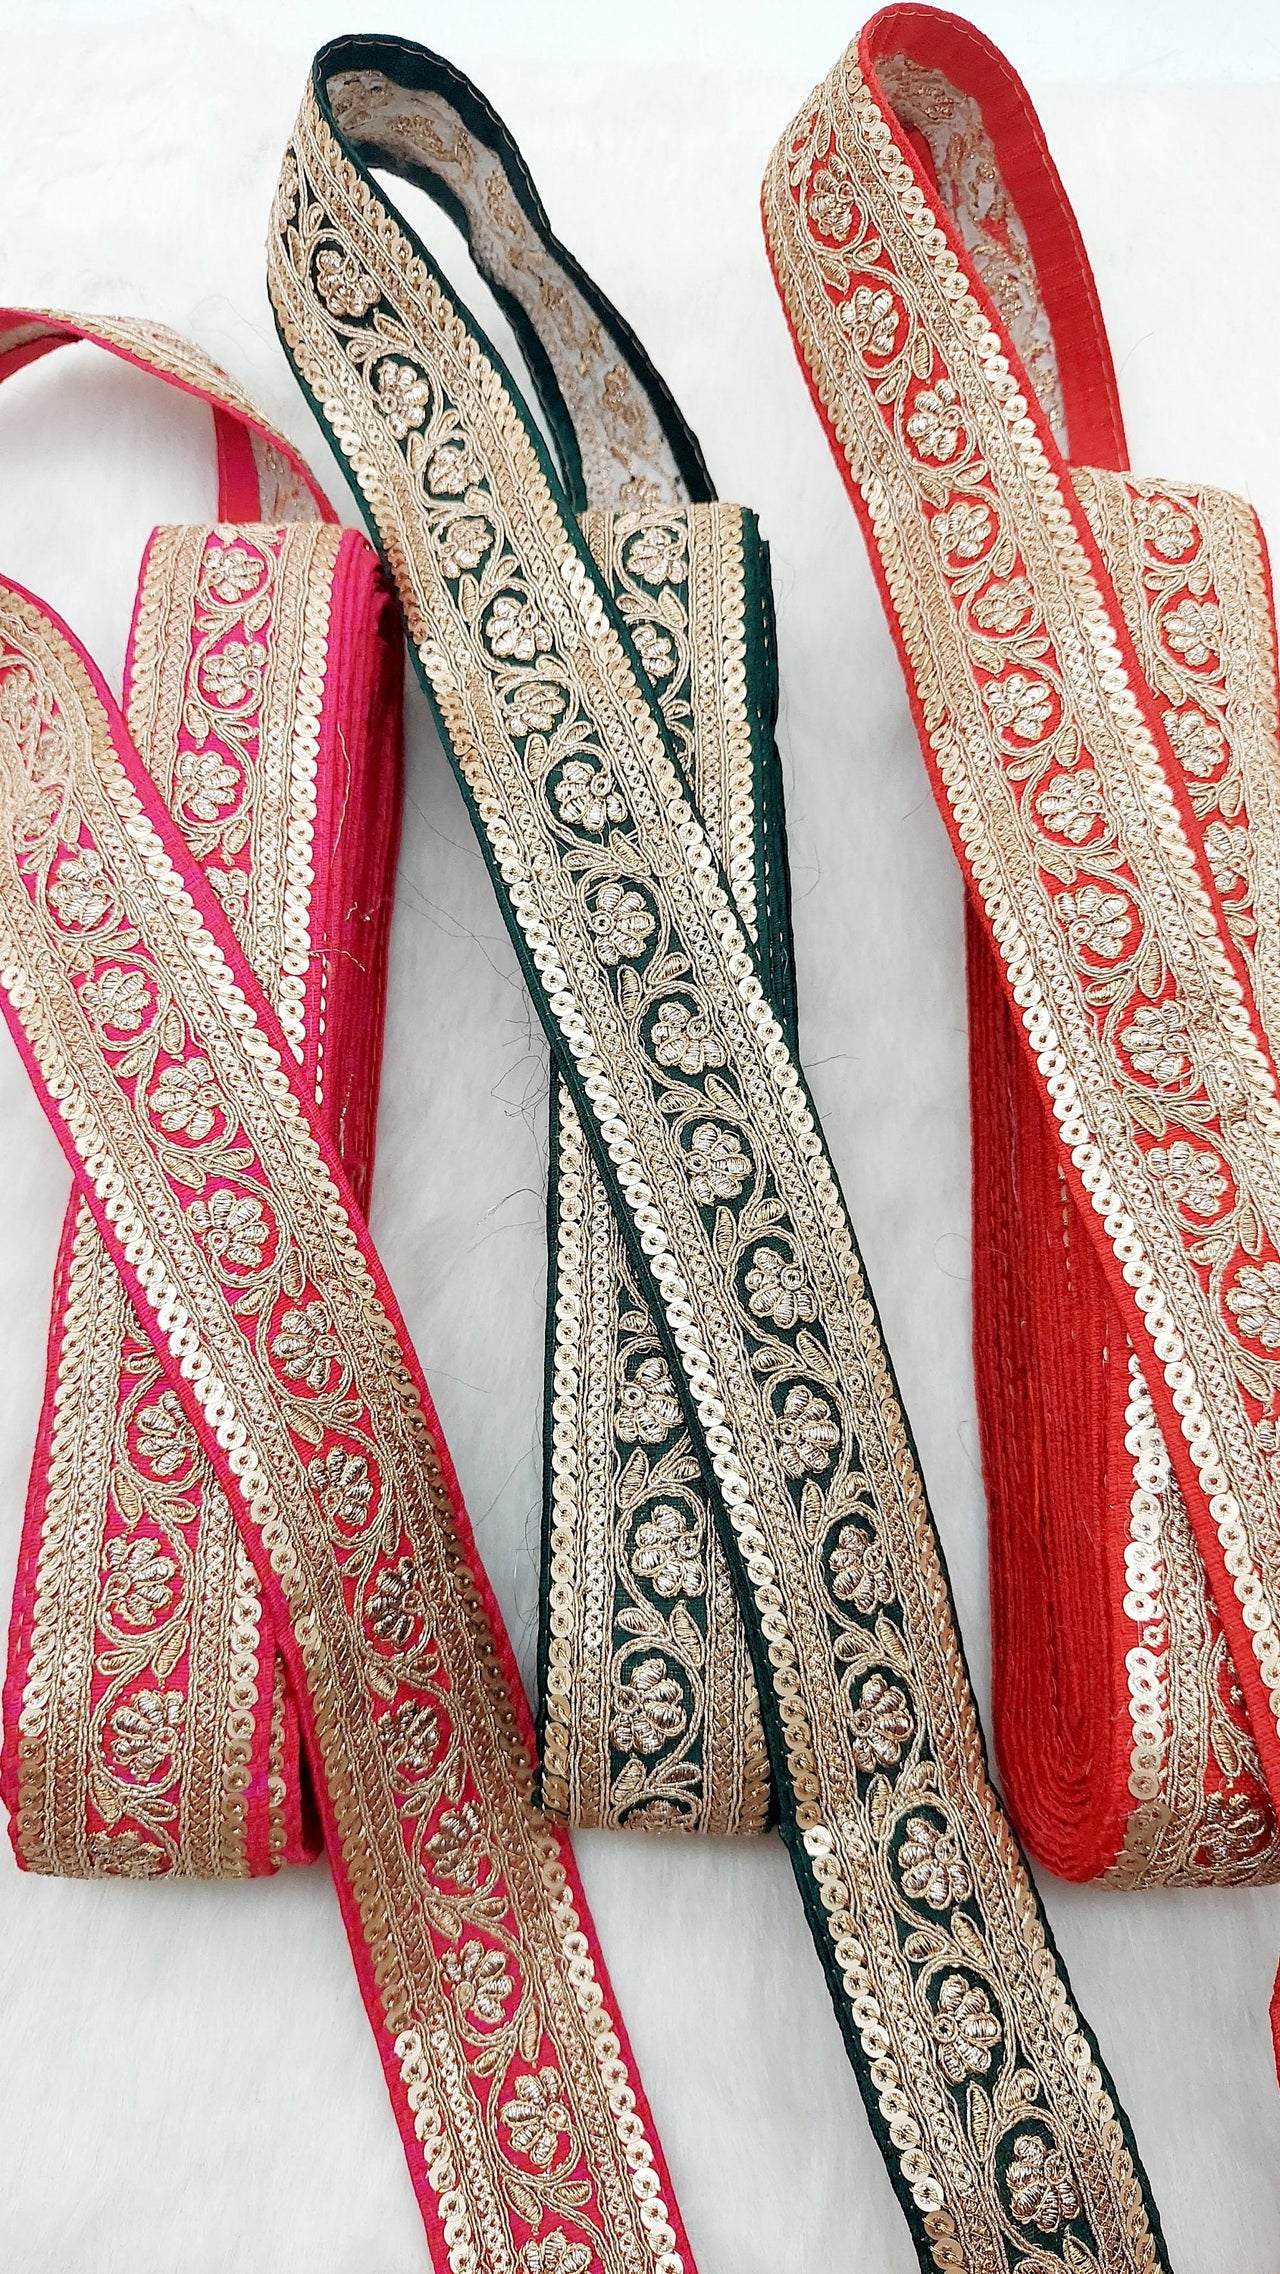 Art Silk Trim Gold Floral Embroidered Sequins Trim, Decorative Trim, Indian Sari Border